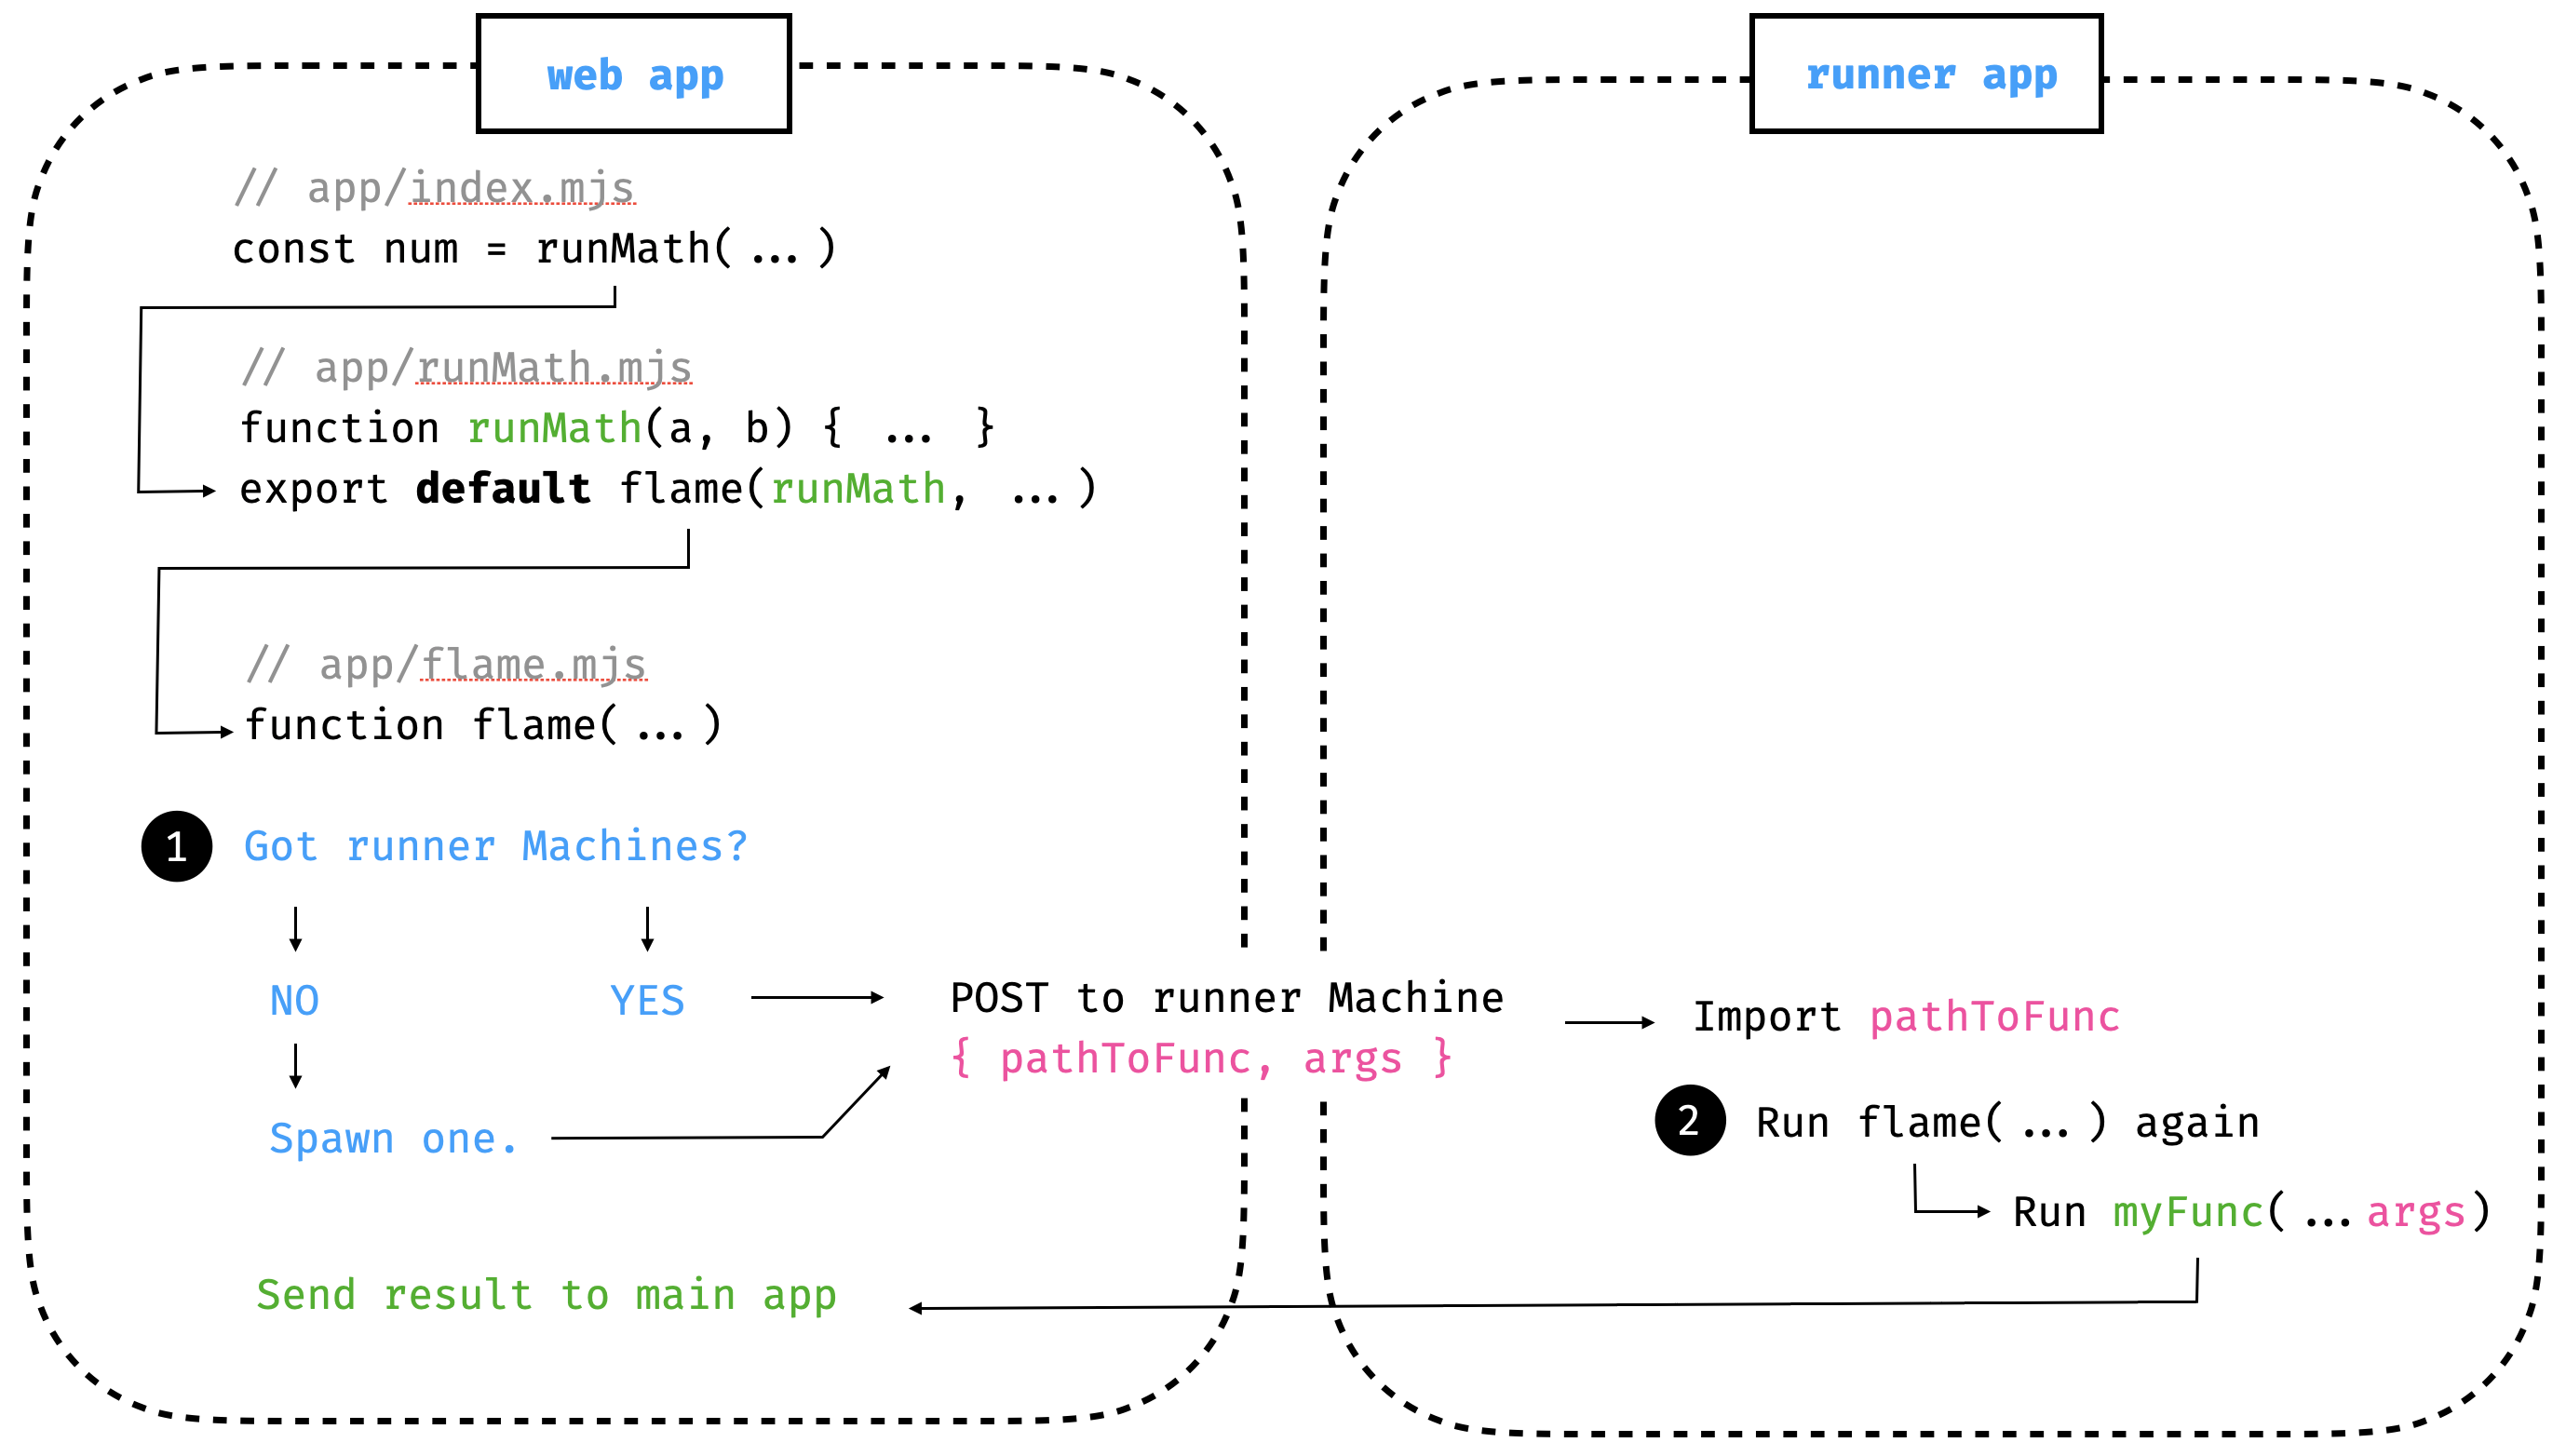 Diagram of how the FLAME pattern works in JavaScript, as described below